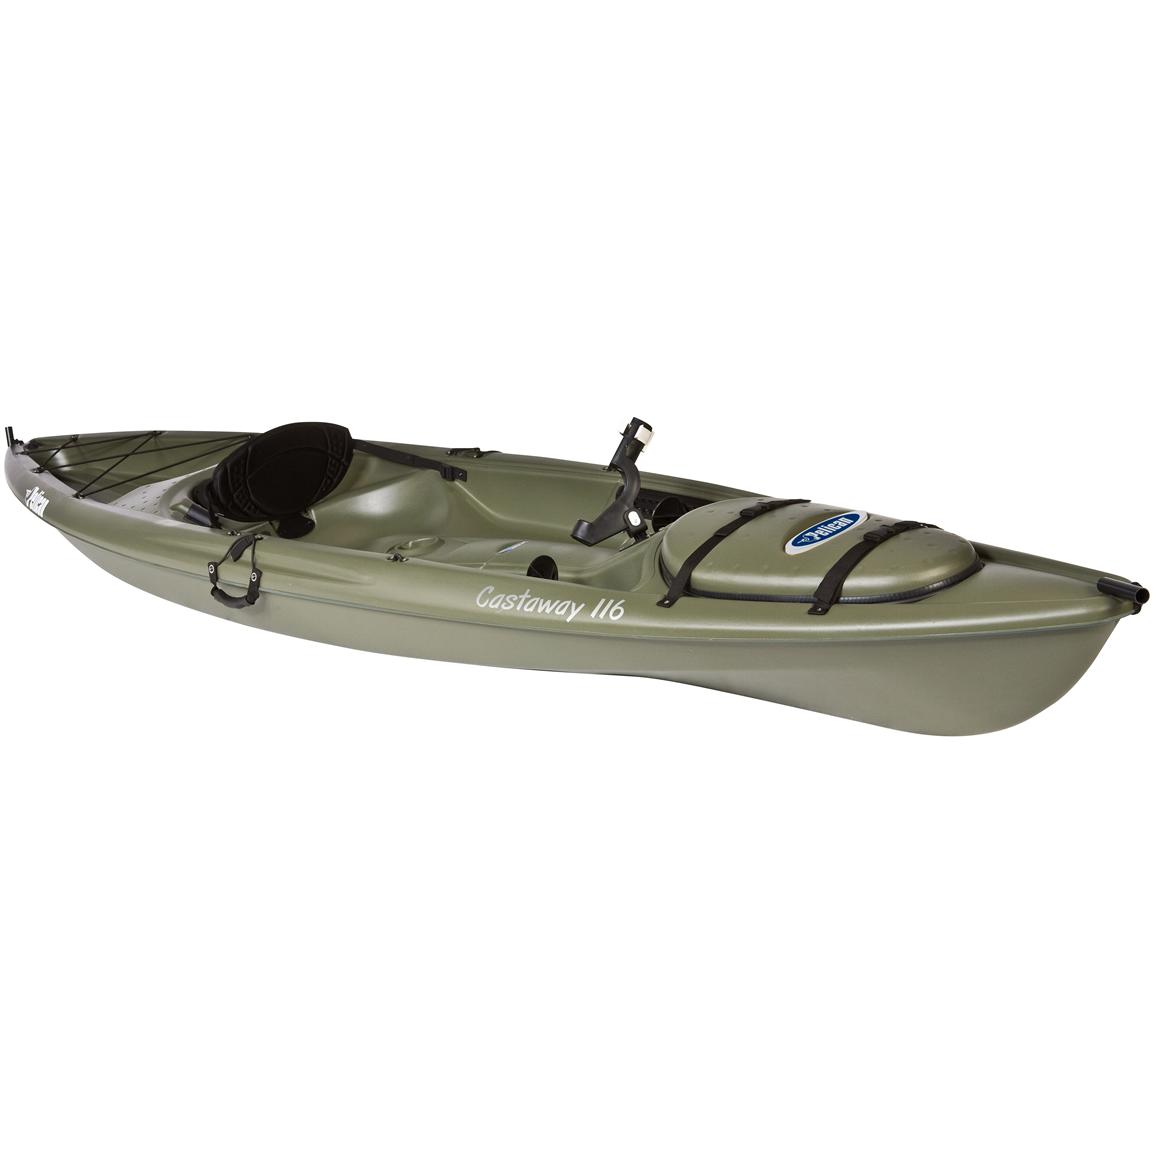 Pelican™ Castaway 116 Kayak, Khaki - 206253, Canoes & Kayaks at Sportsman's Guide1154 x 1154